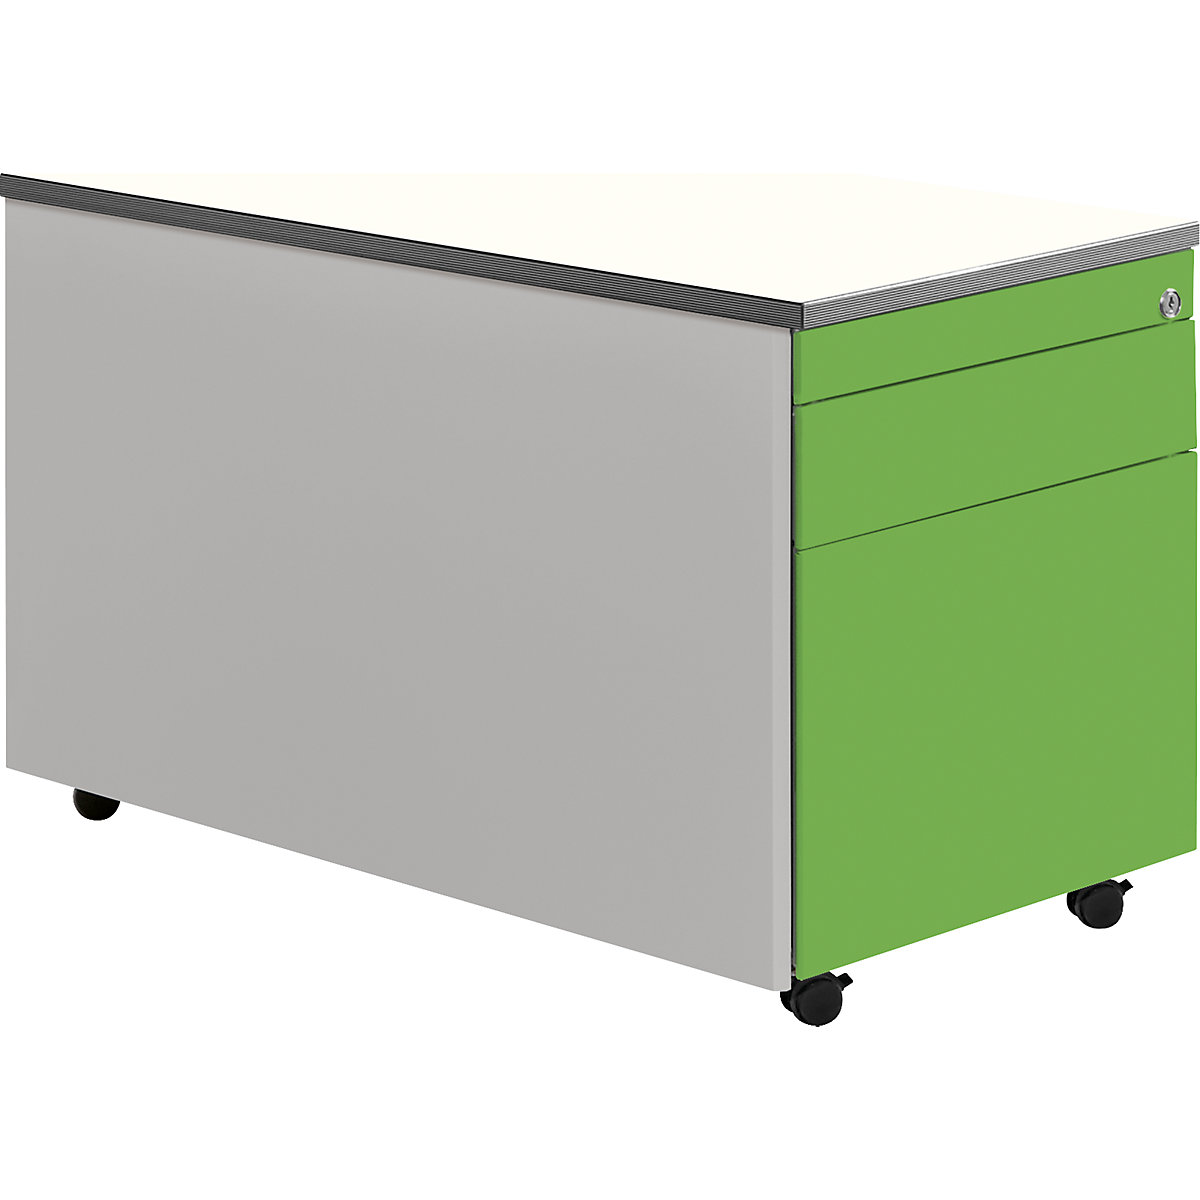 Zásuvkový kontejner s koly – mauser, v x h 529 x 800 mm, 1 zásuvka na materiál, 1 kartotéka pro závěsné složky, bílý hliník / zelenožlutá / bílá-7